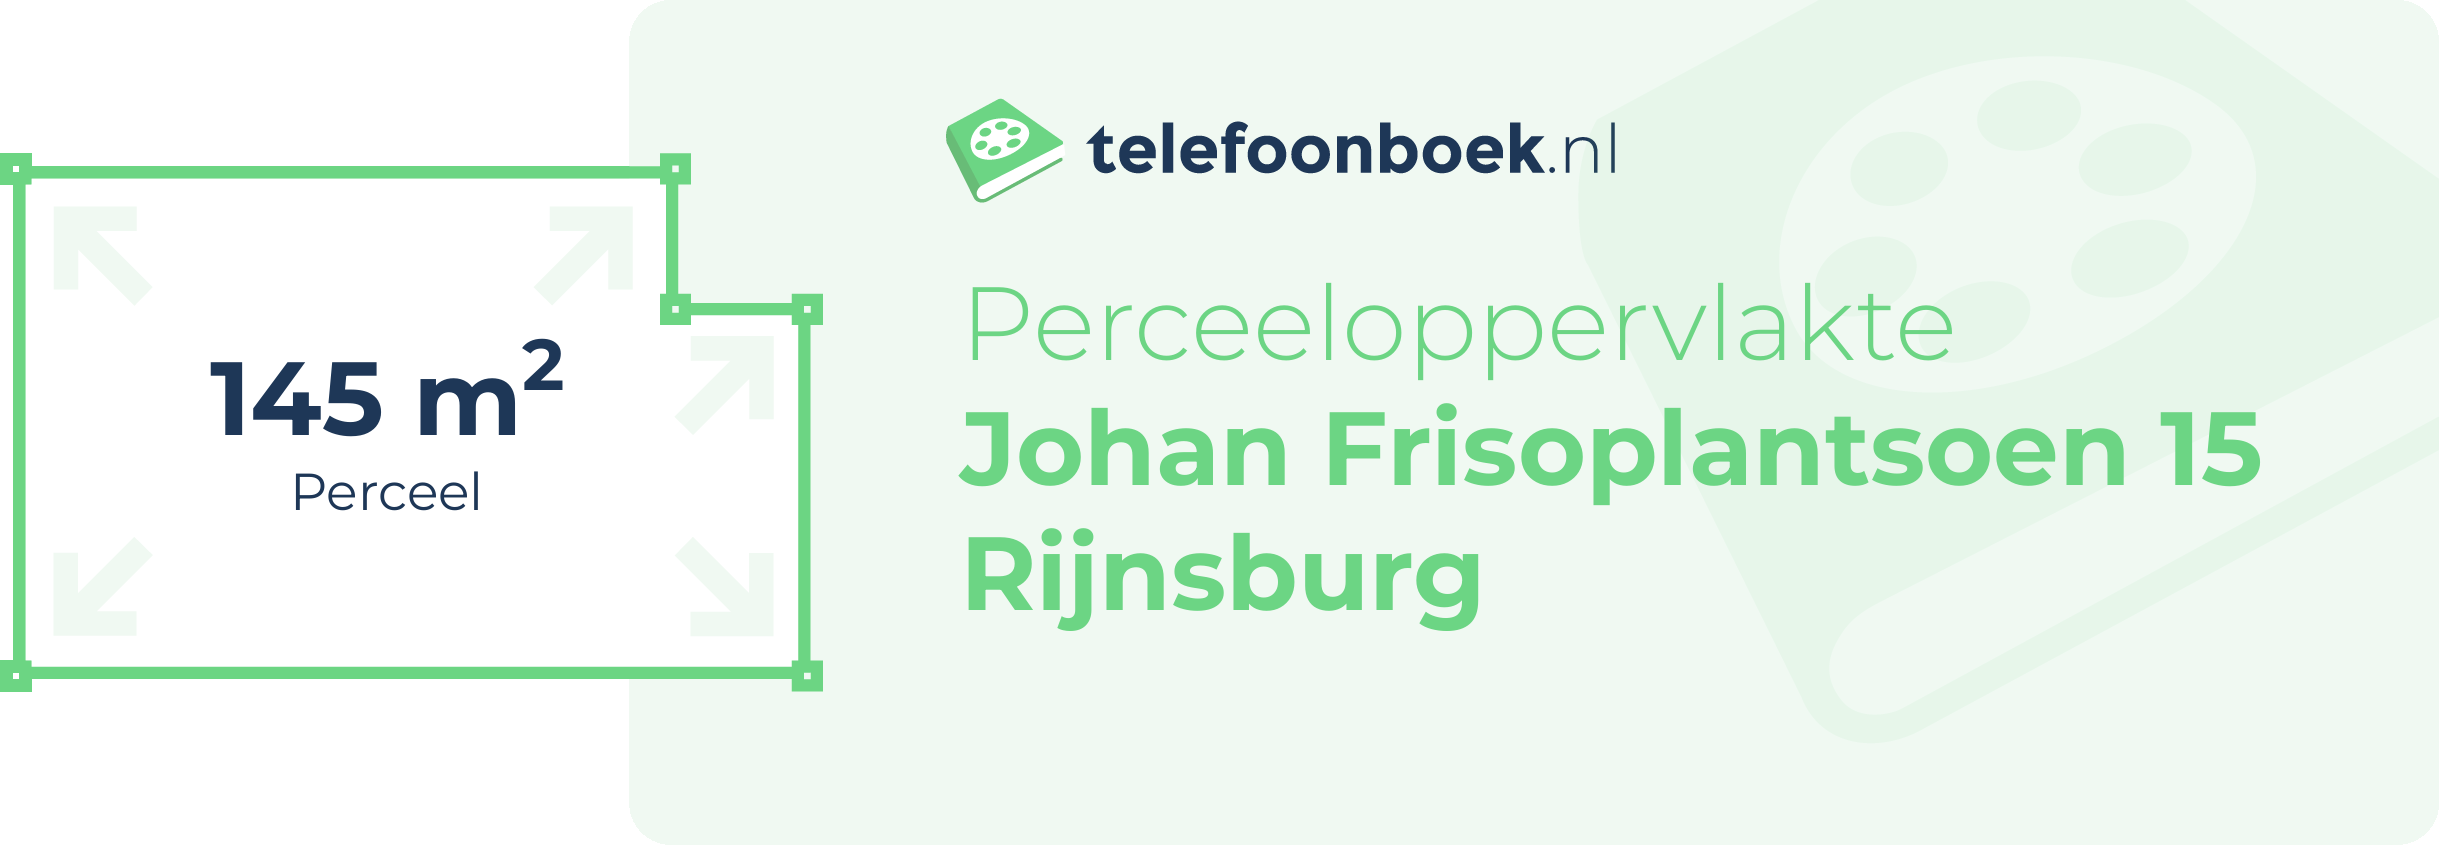 Perceeloppervlakte Johan Frisoplantsoen 15 Rijnsburg